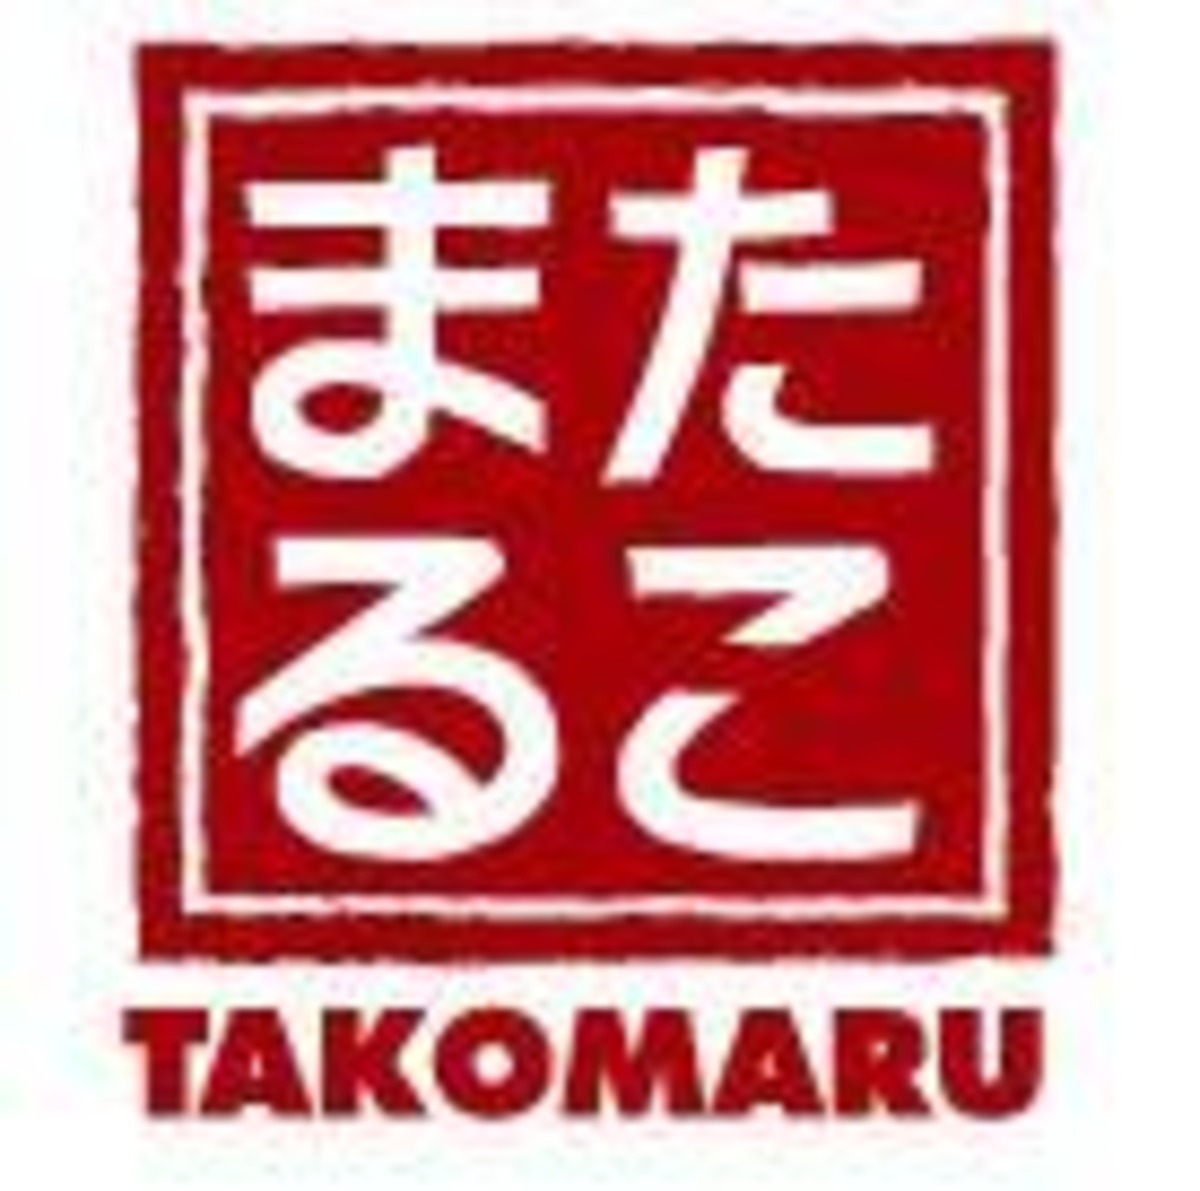 shop.takomaru.com